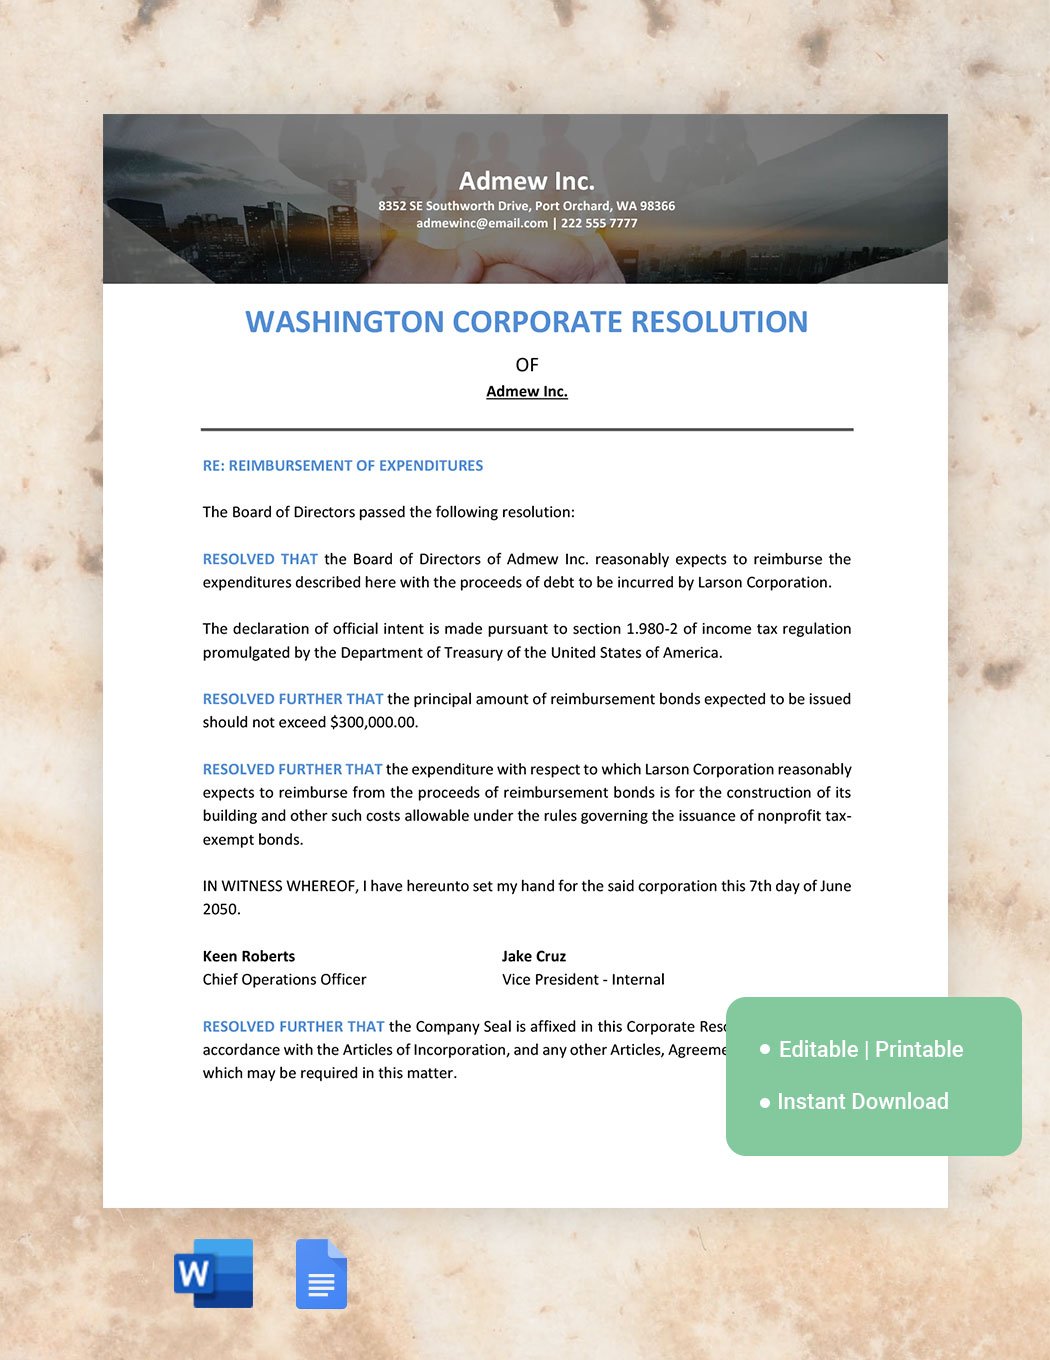 Washington Corporate Resolution Template